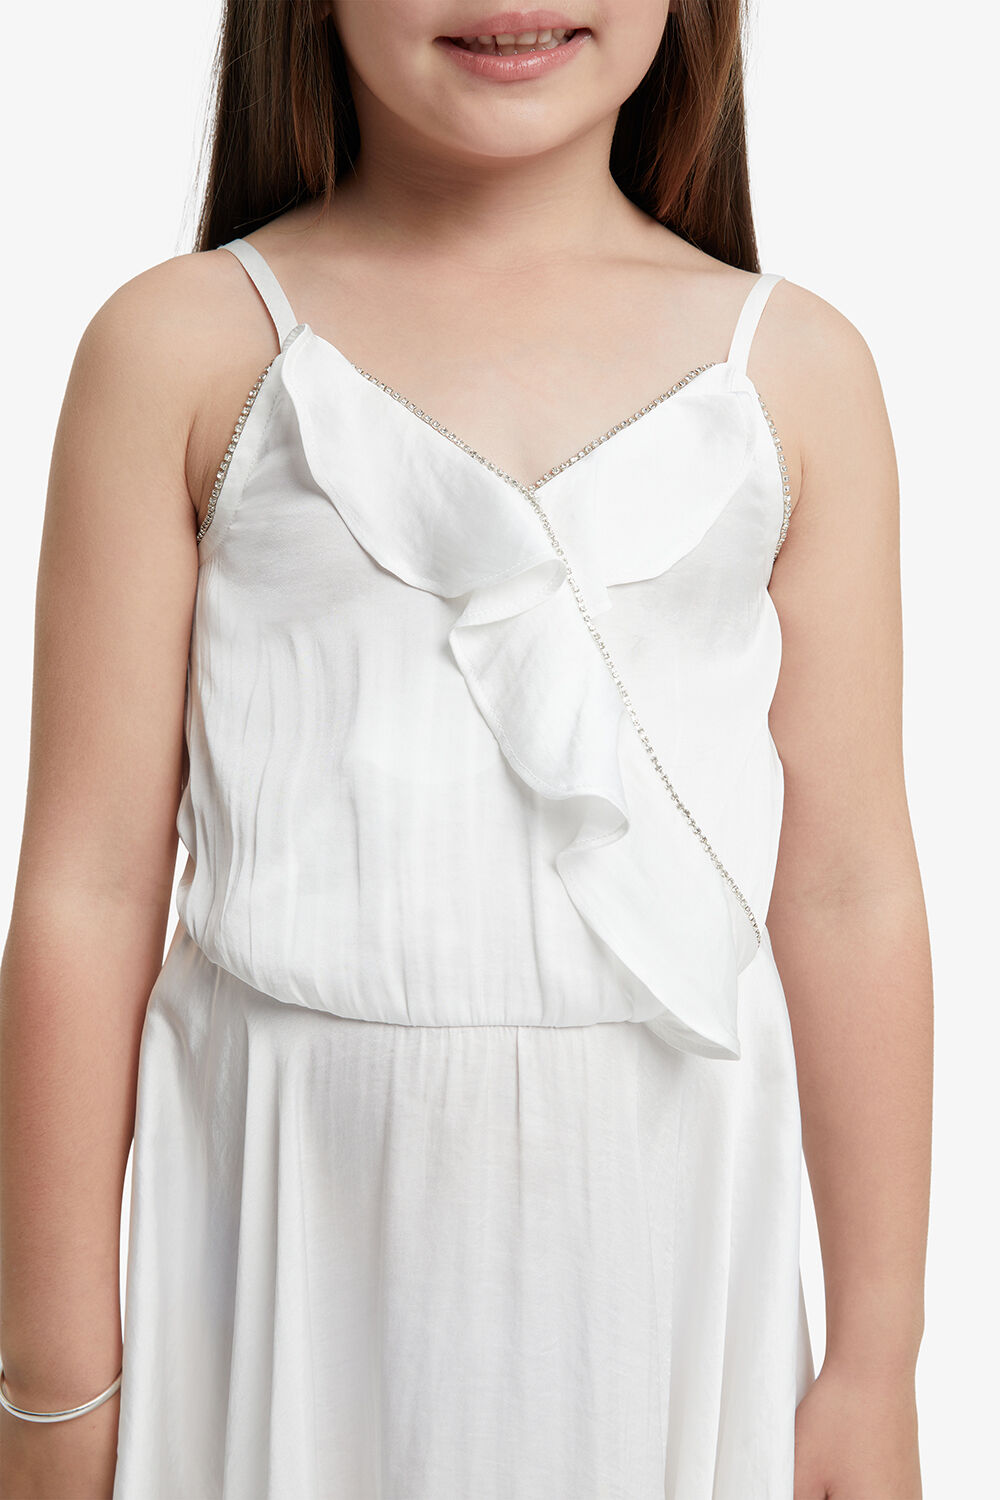 DIVYA HANKY DRESS in colour BRIGHT WHITE